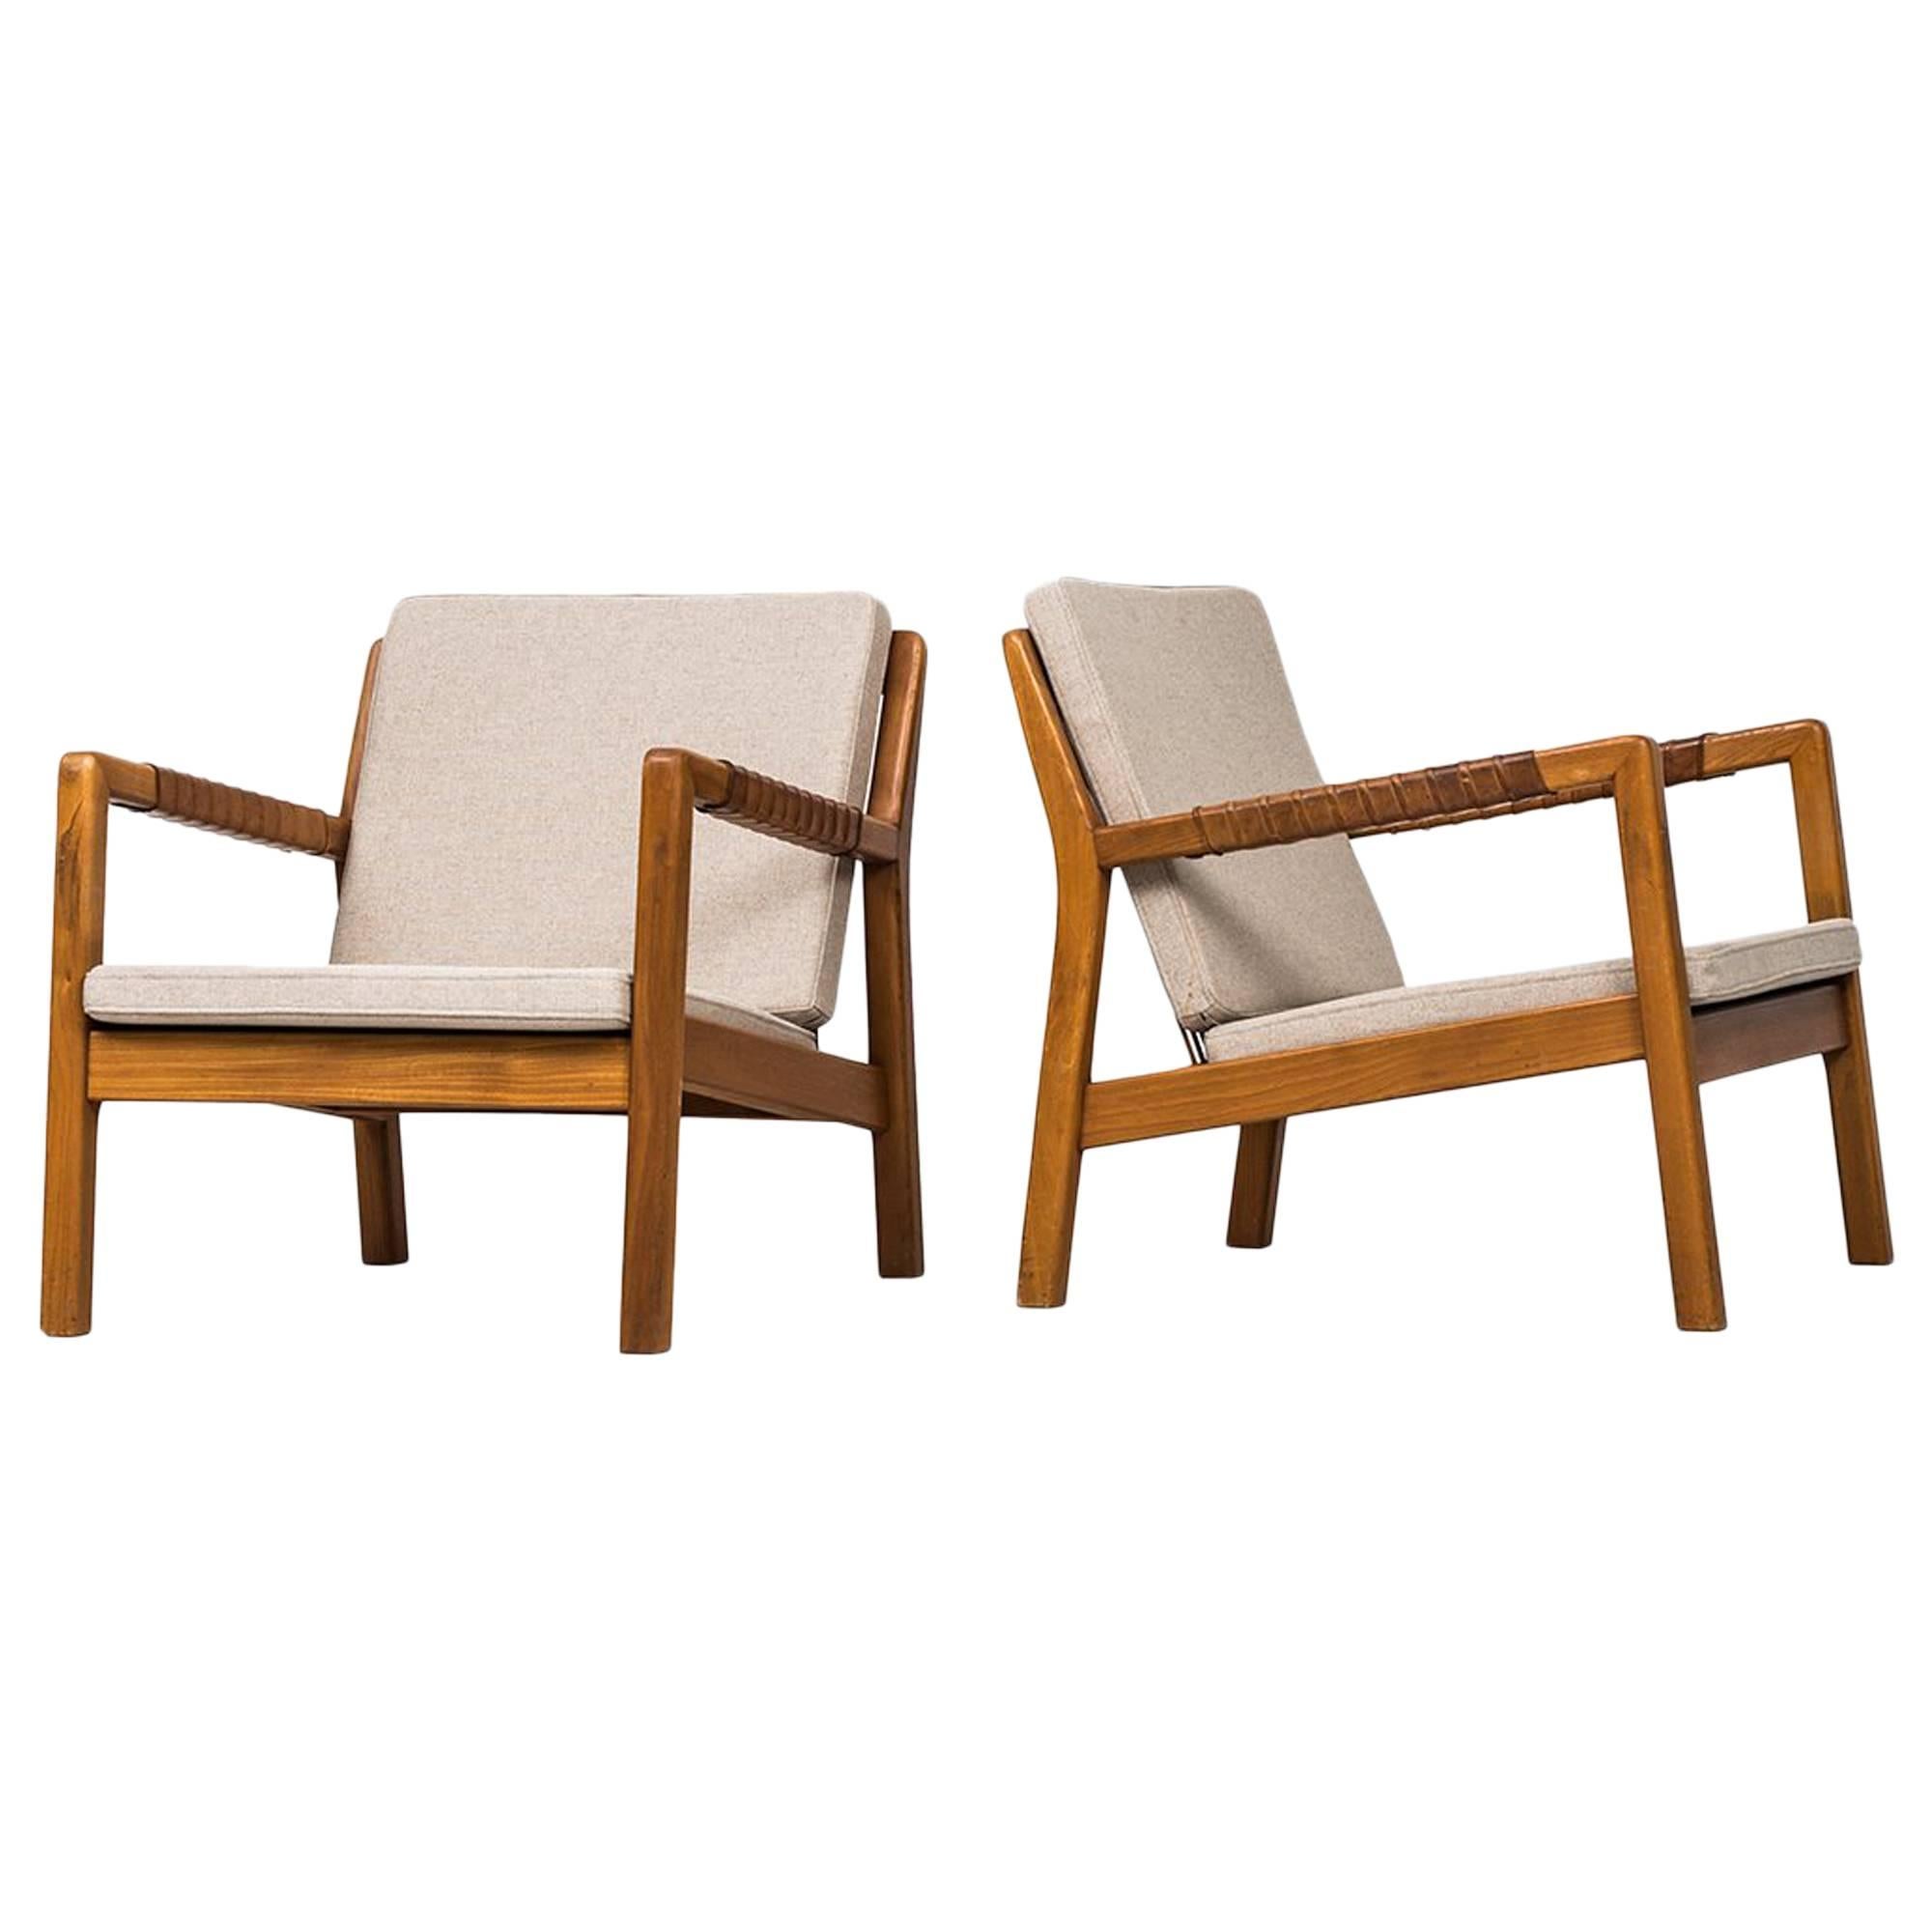 Carl Gustaf Hiort af Ornäs Easy Chairs Model Trienna Produced in Finland